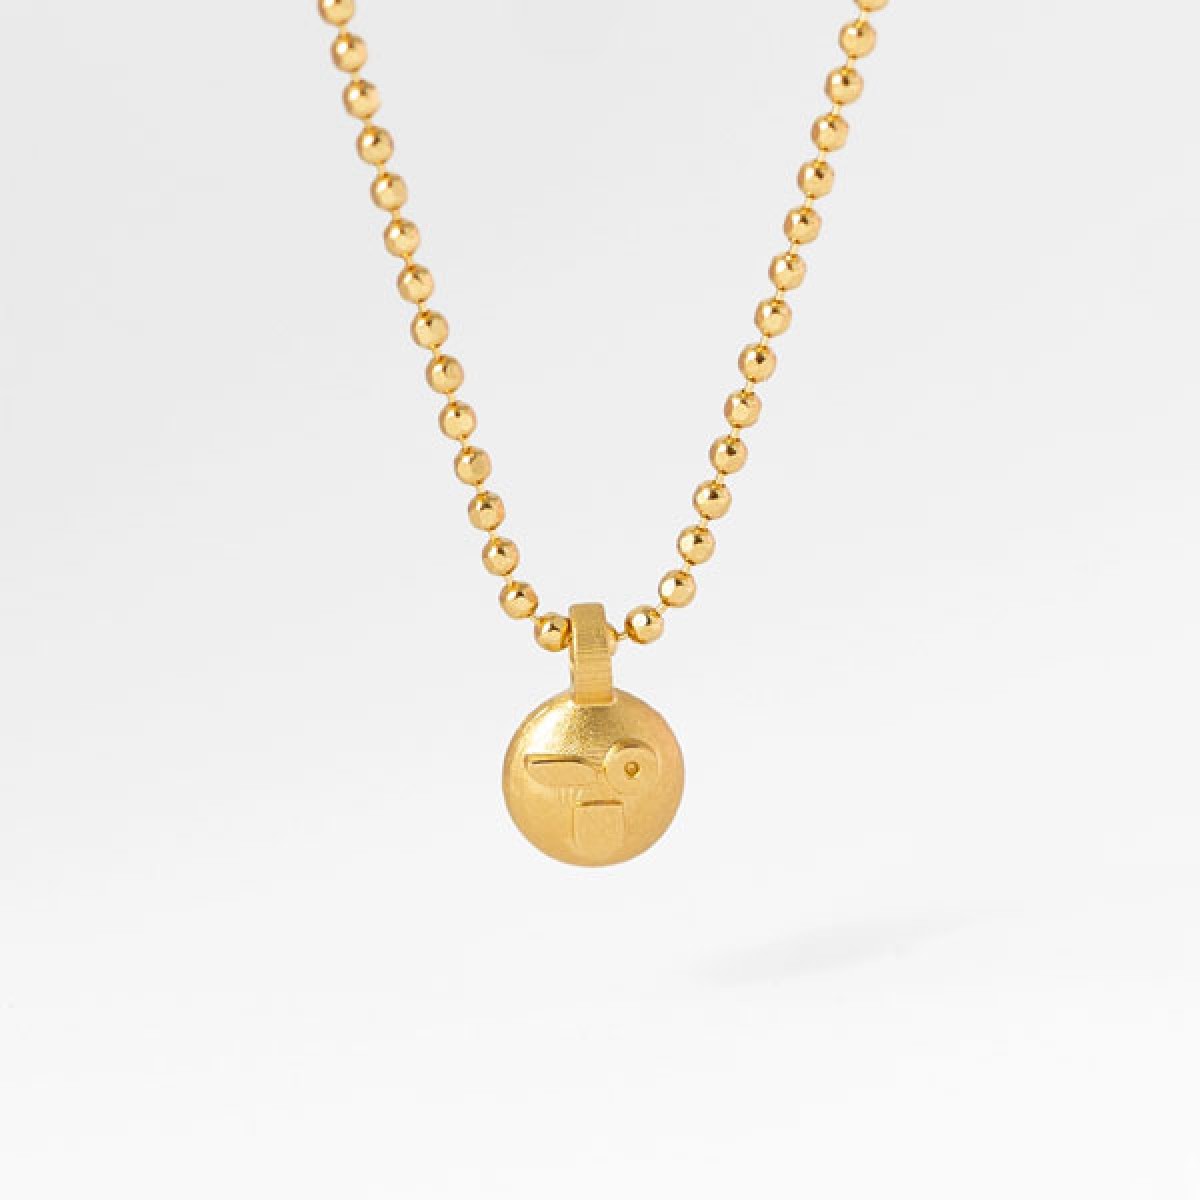 related by objects - vibe necklace - namaste - 925 Sterlingsilber - goldplattiert 